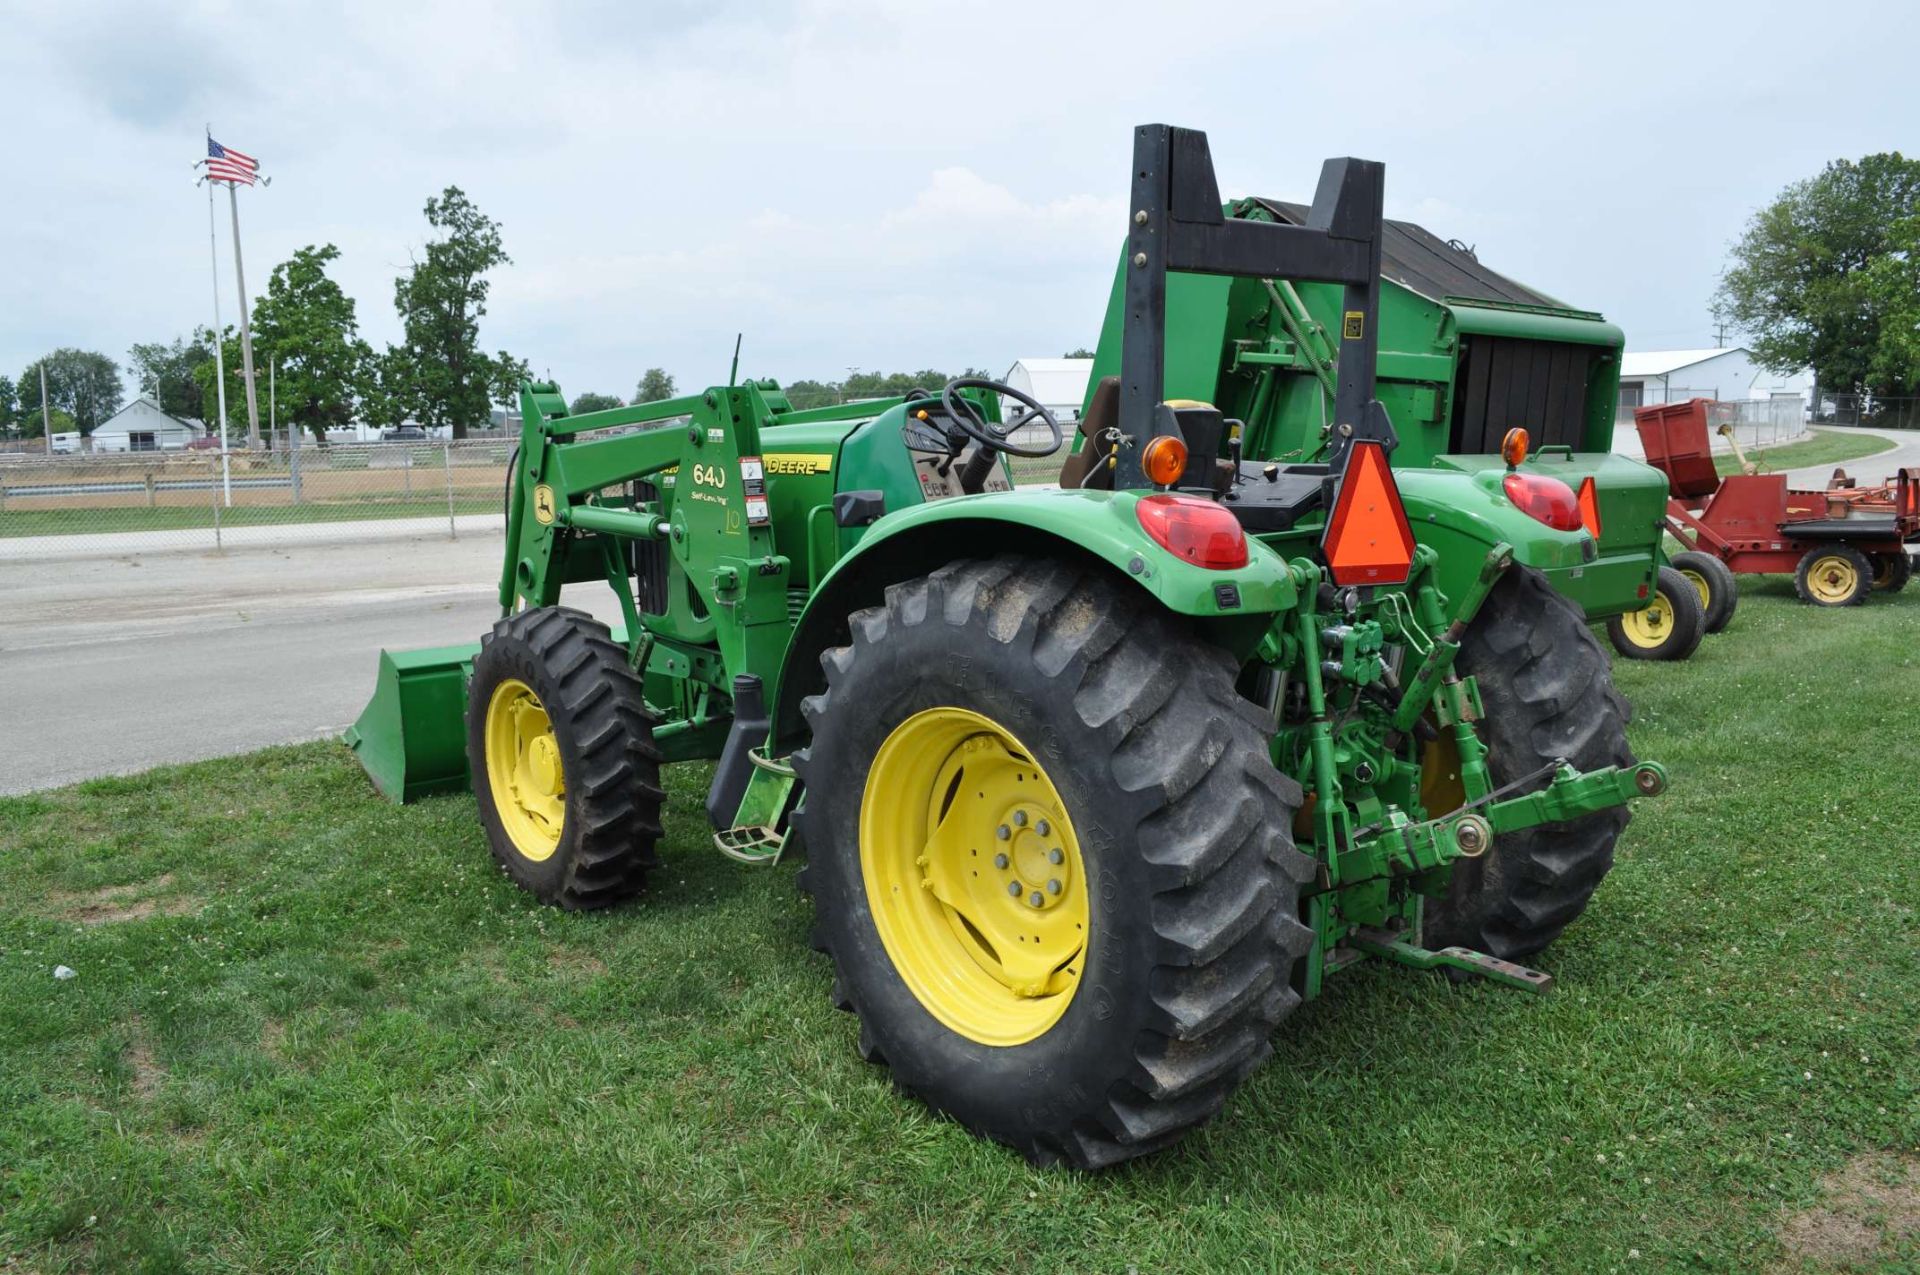 John Deere 6420L MFWD tractor w/ JD 640 self-leveling loader, shows 3648 hrs - Image 4 of 16